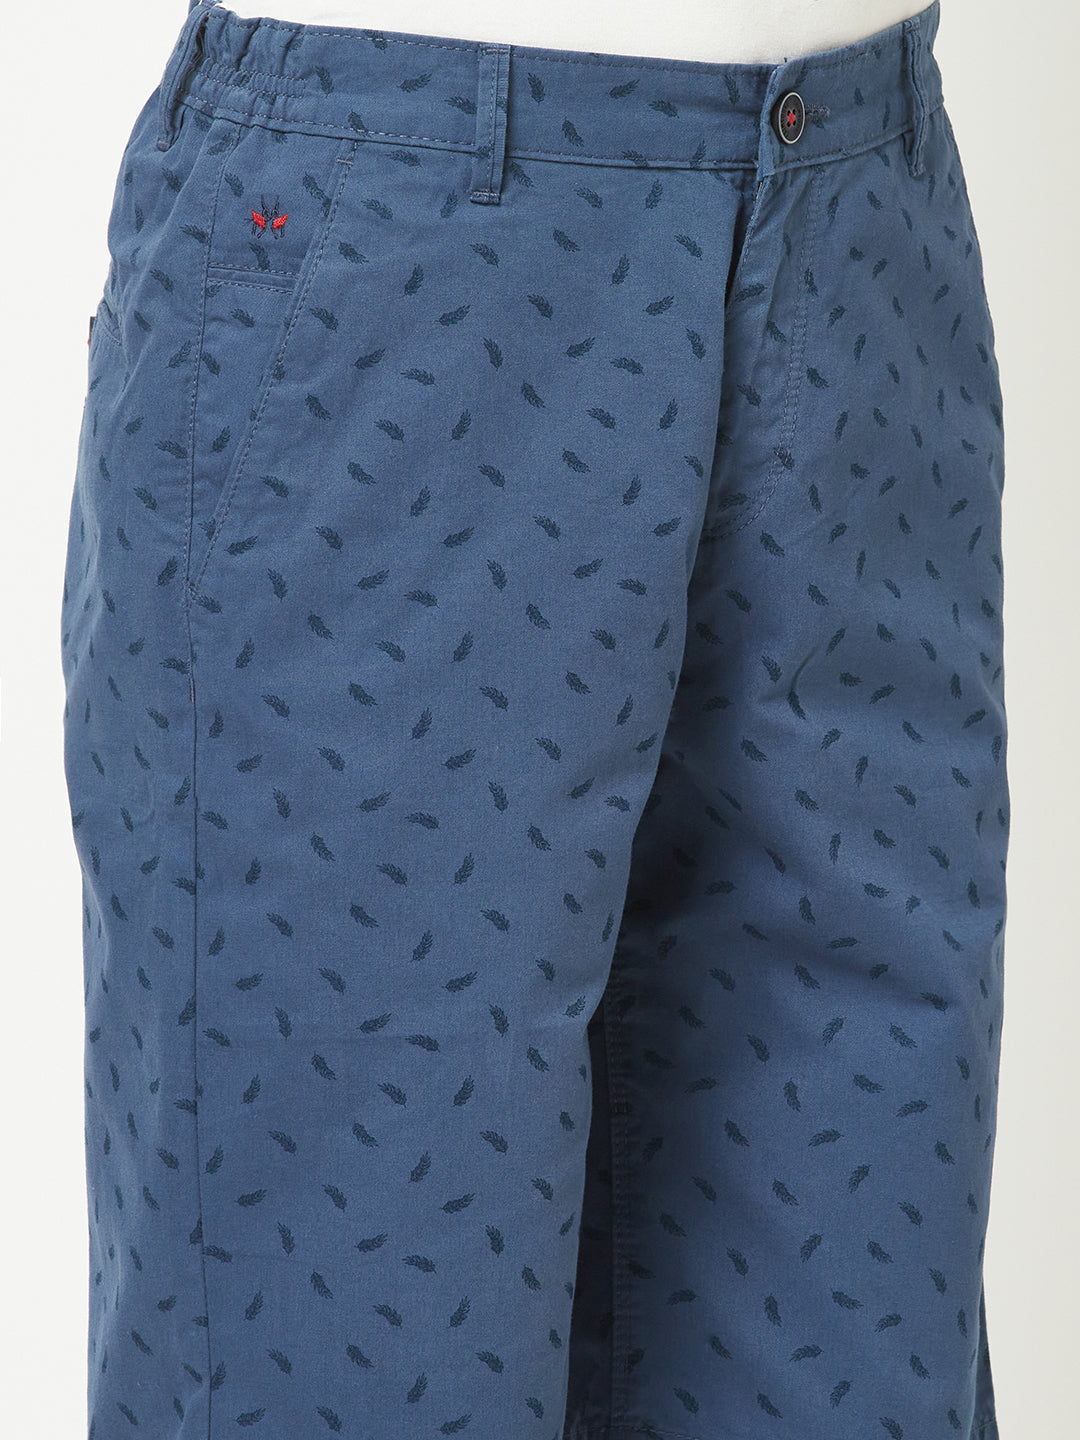  Blue Leaf-Printed Shorts 